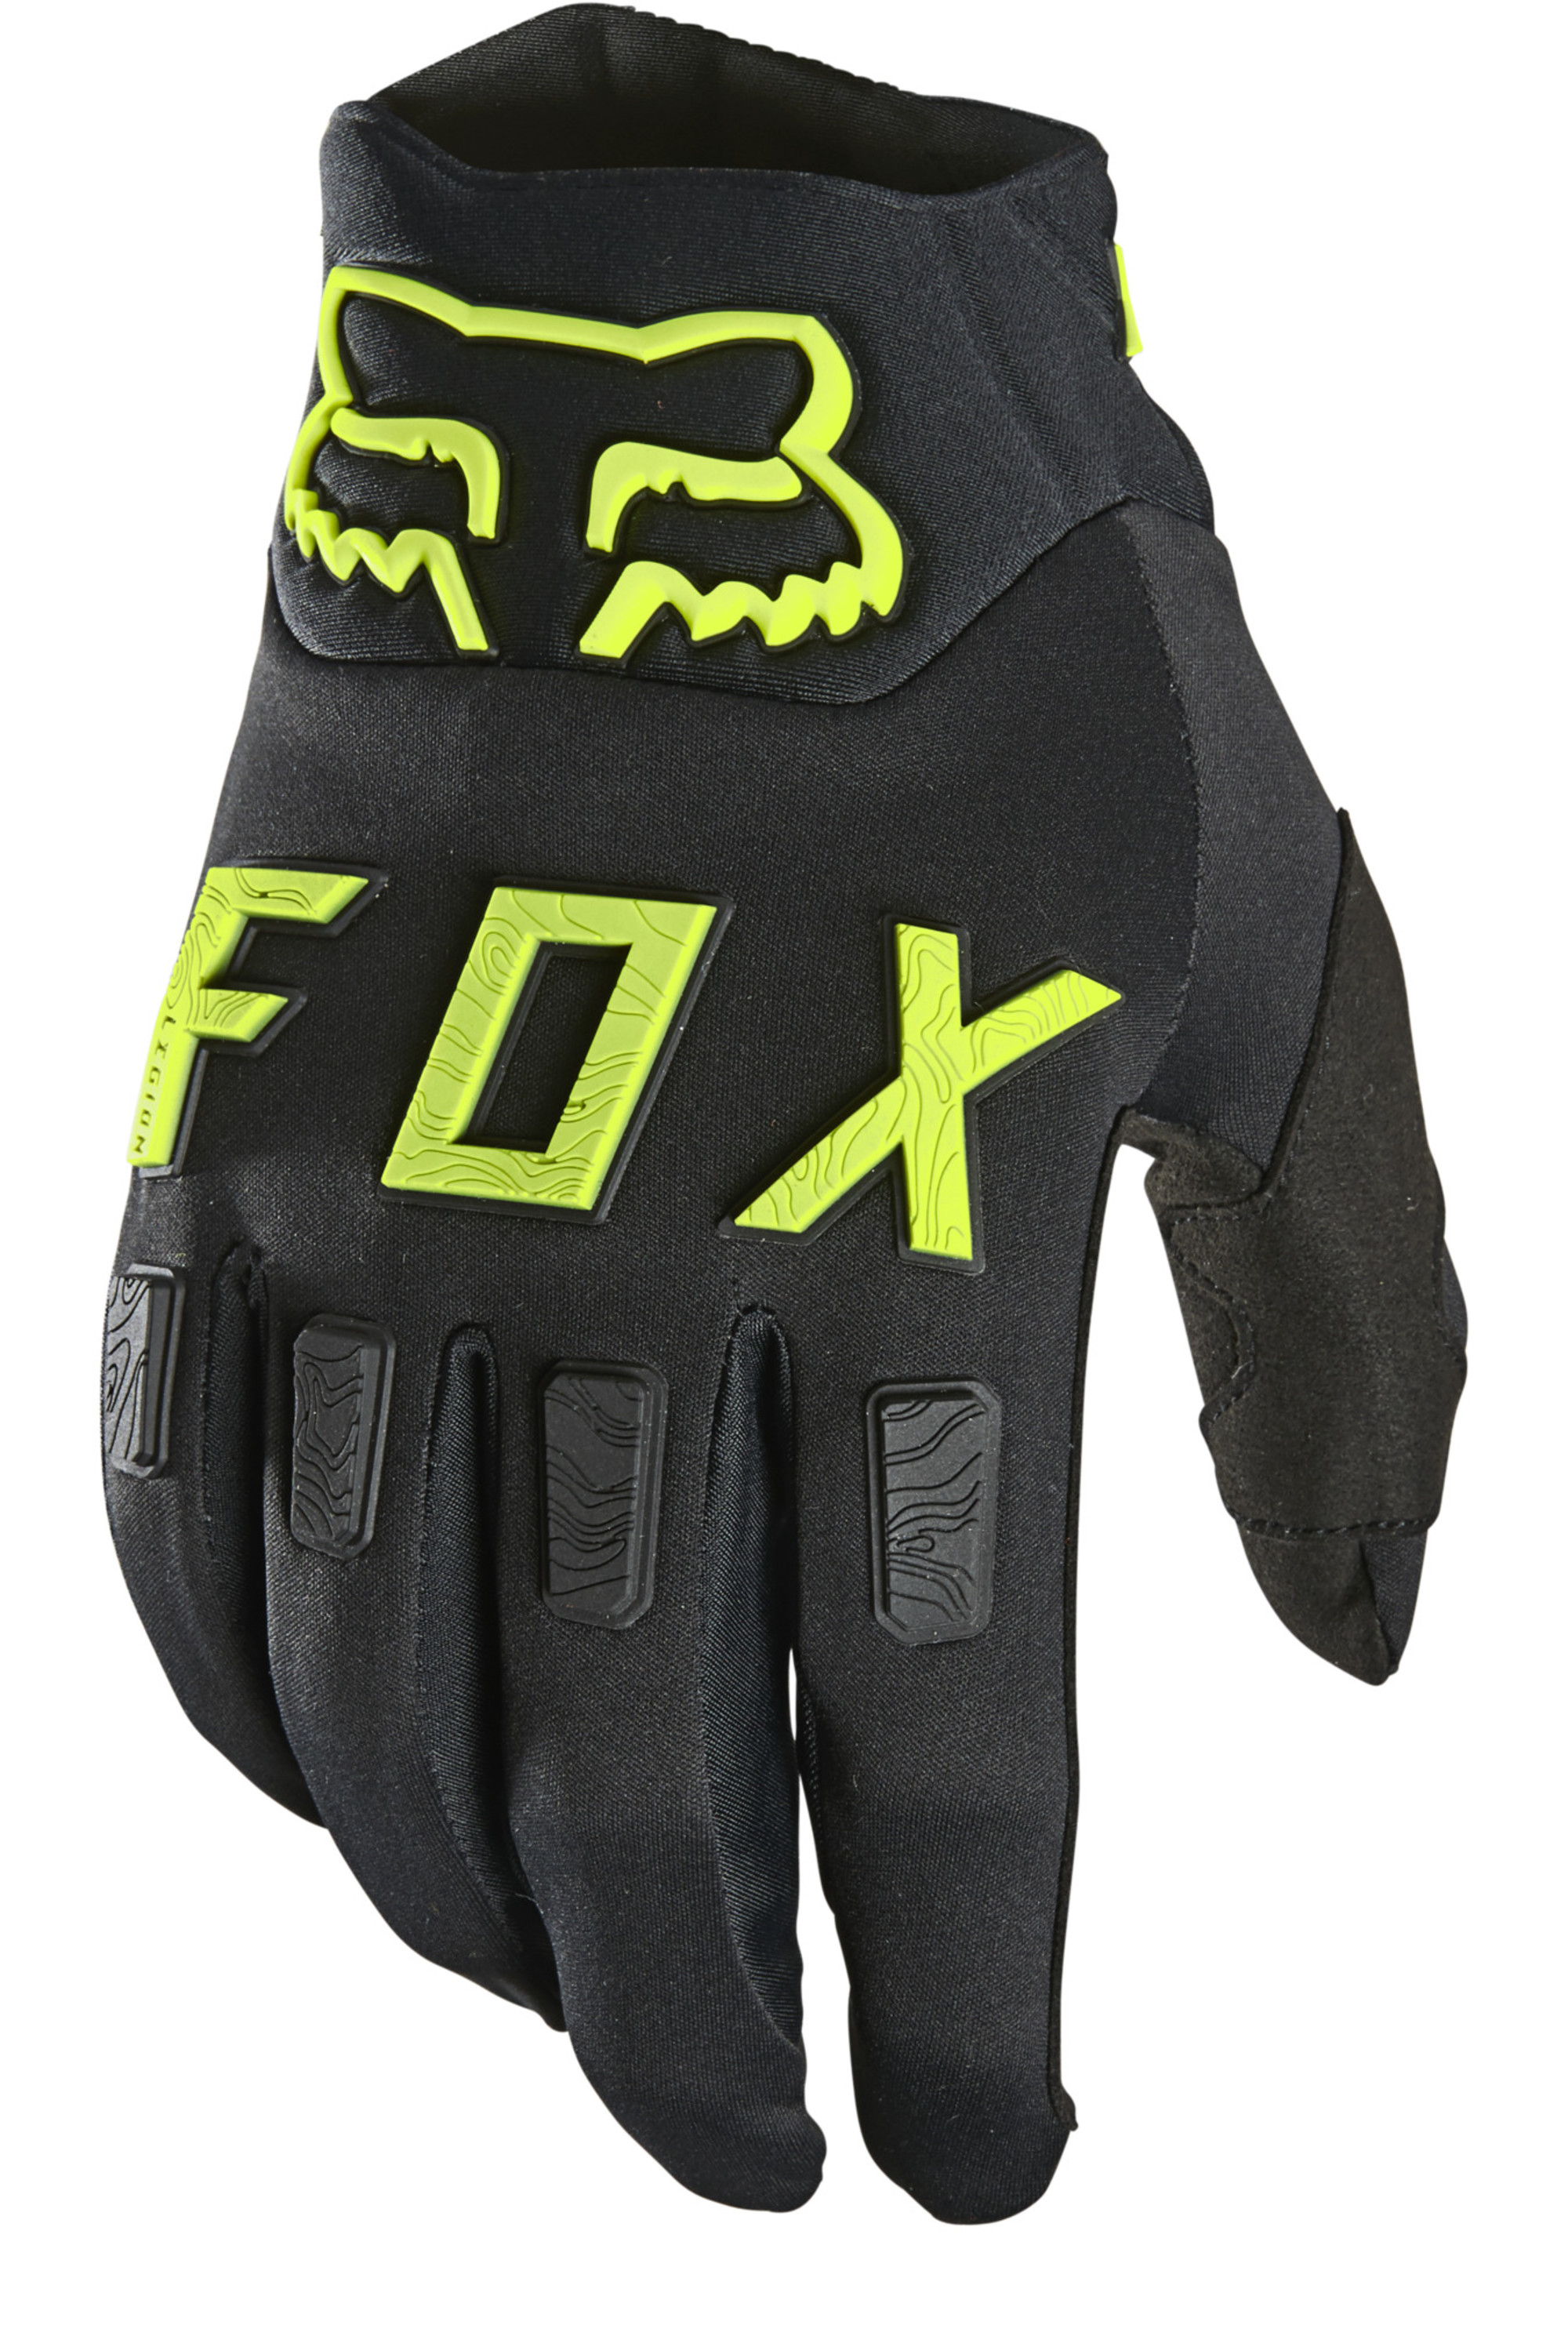 fox racing gloves for men legion water